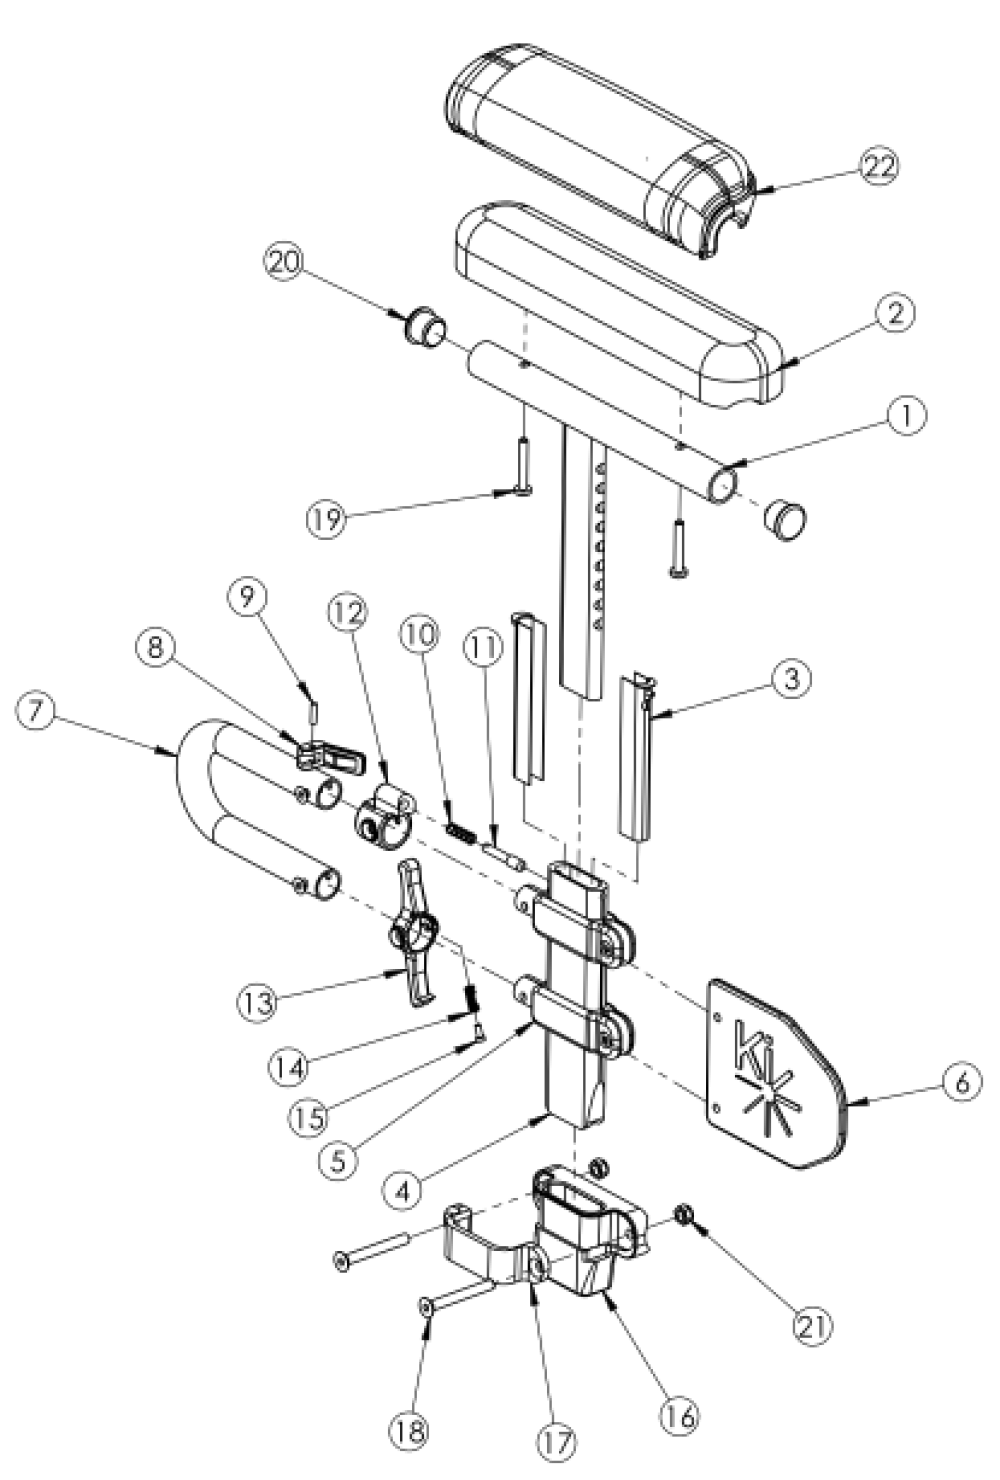 Rogue2 Armrest - Height Adjustable Low T-arm parts diagram